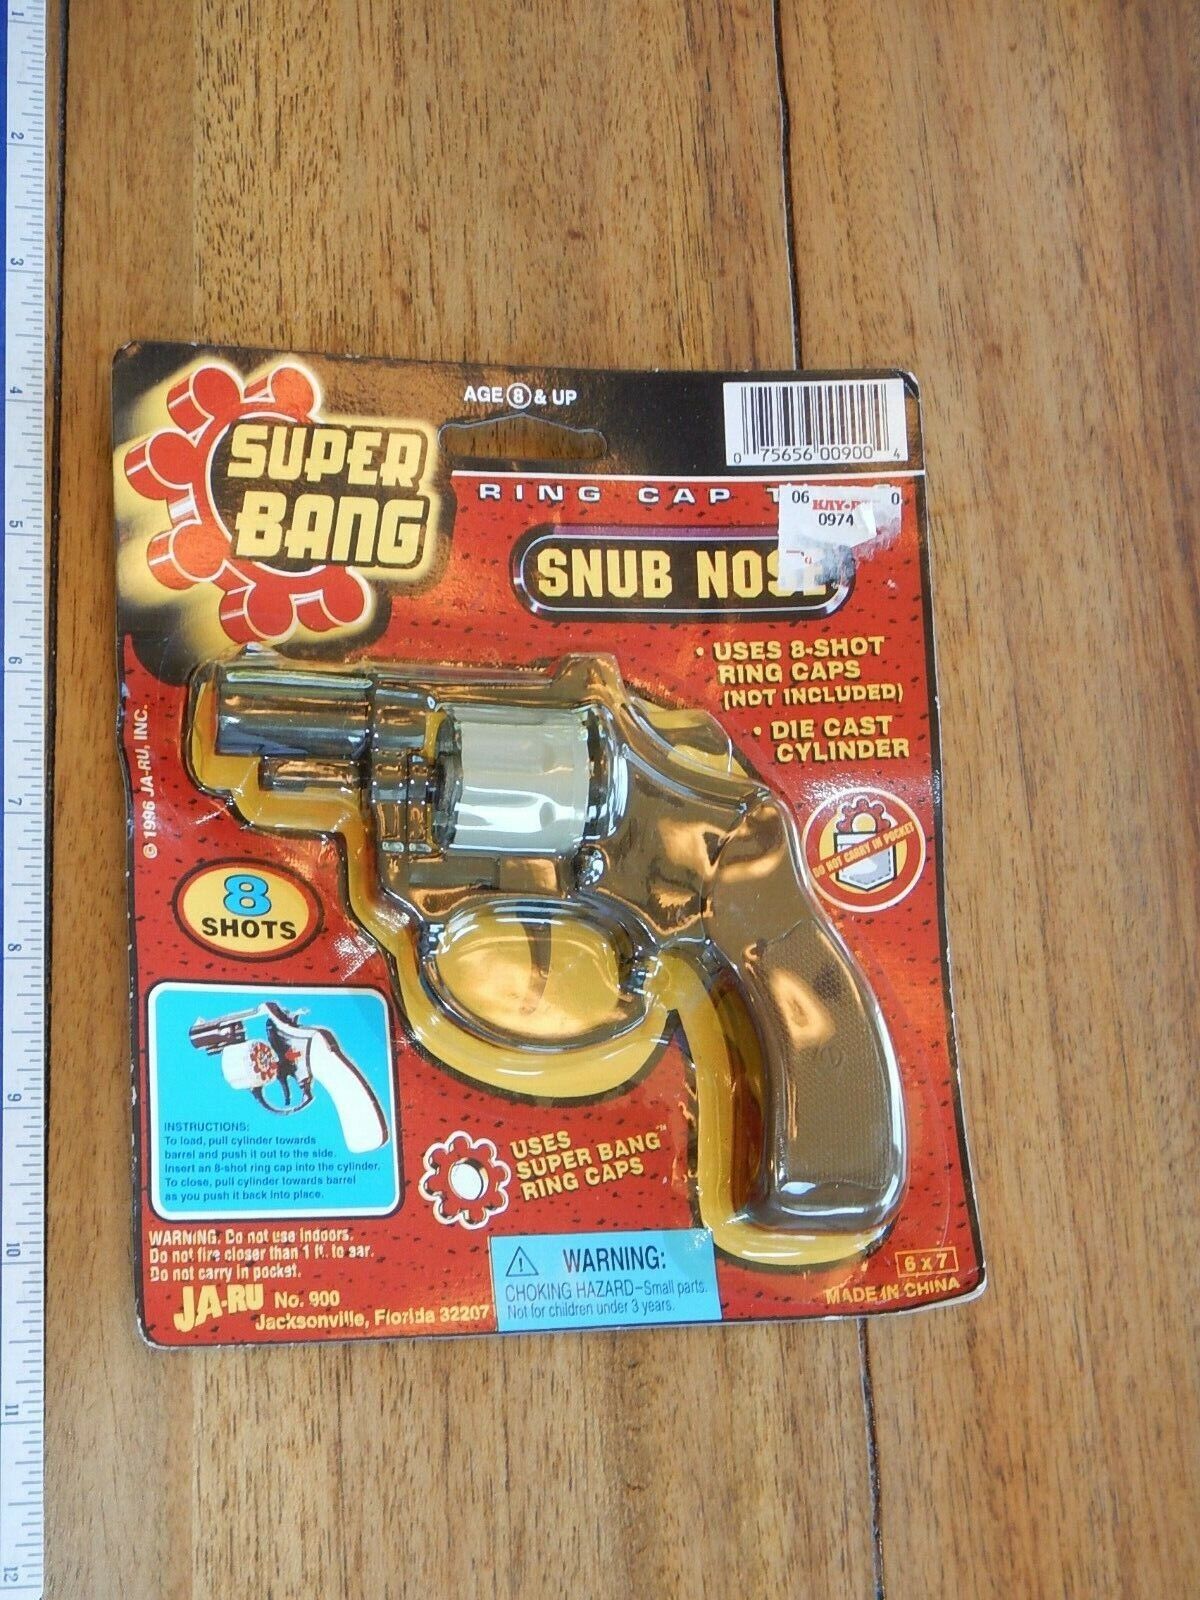 Ja-Ru Super Bang Snub Nose Ring Cap Gun - Shop Blasters at H-E-B